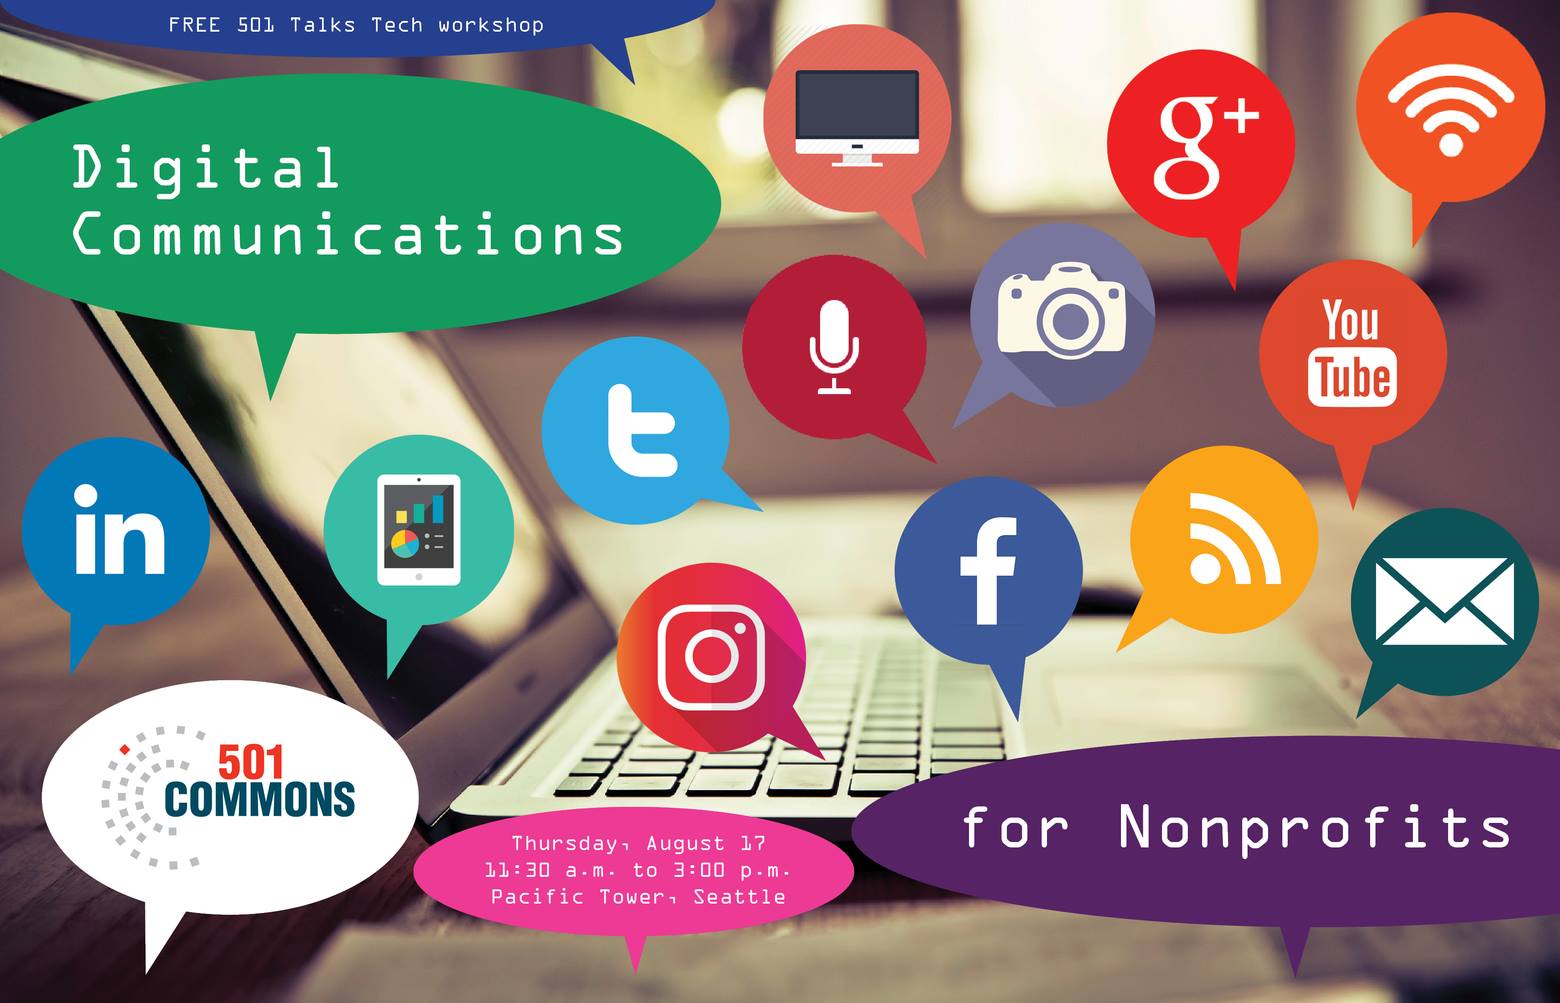 Digital Communications for Nonprofits (August 17, 11:30am – 3pm)